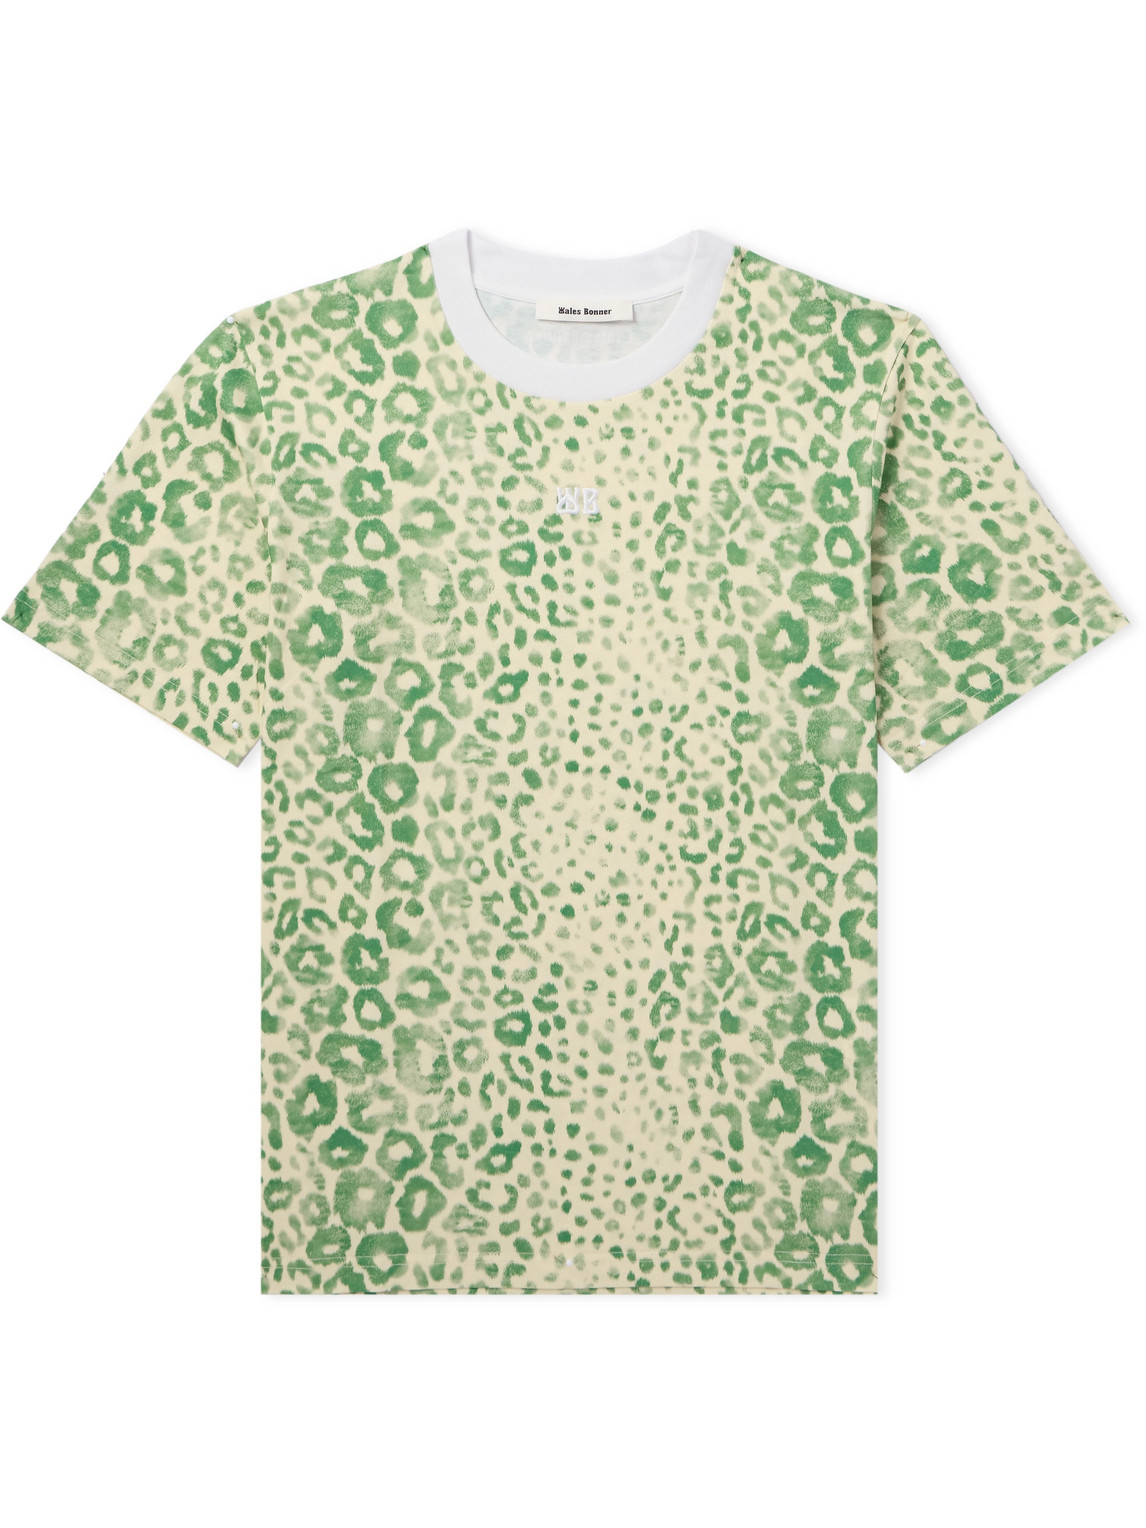 Wales Bonner - Original Logo-Embroidered Leopard-Print Organic Cotton-Jersey T-Shirt - Men - Green - M von Wales Bonner